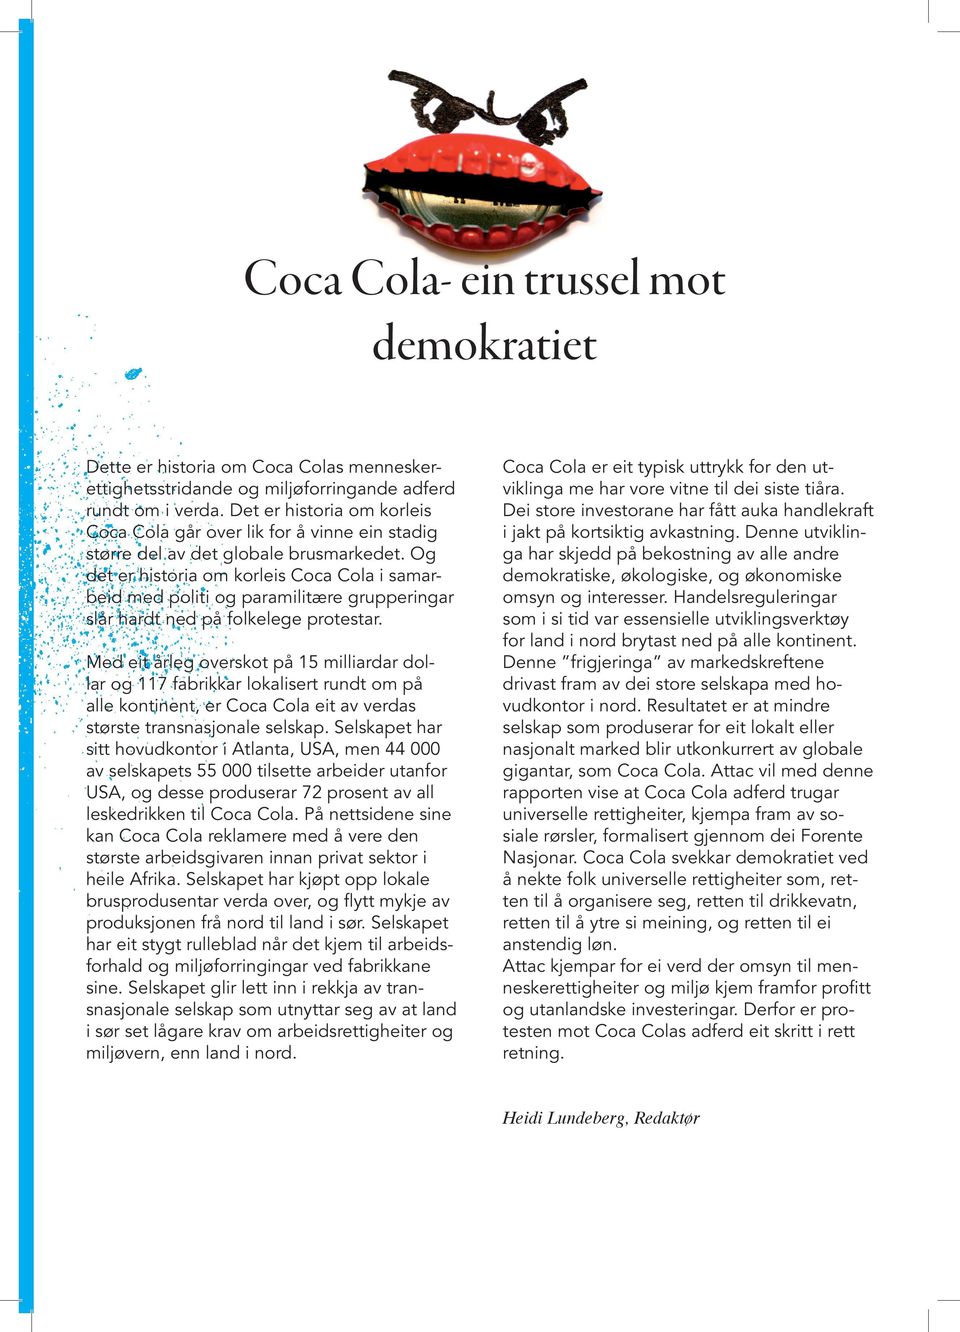 Og det er historia om korleis Coca Cola i samarbeid med politi og paramilitære grupperingar slår hardt ned på folkelege protestar.